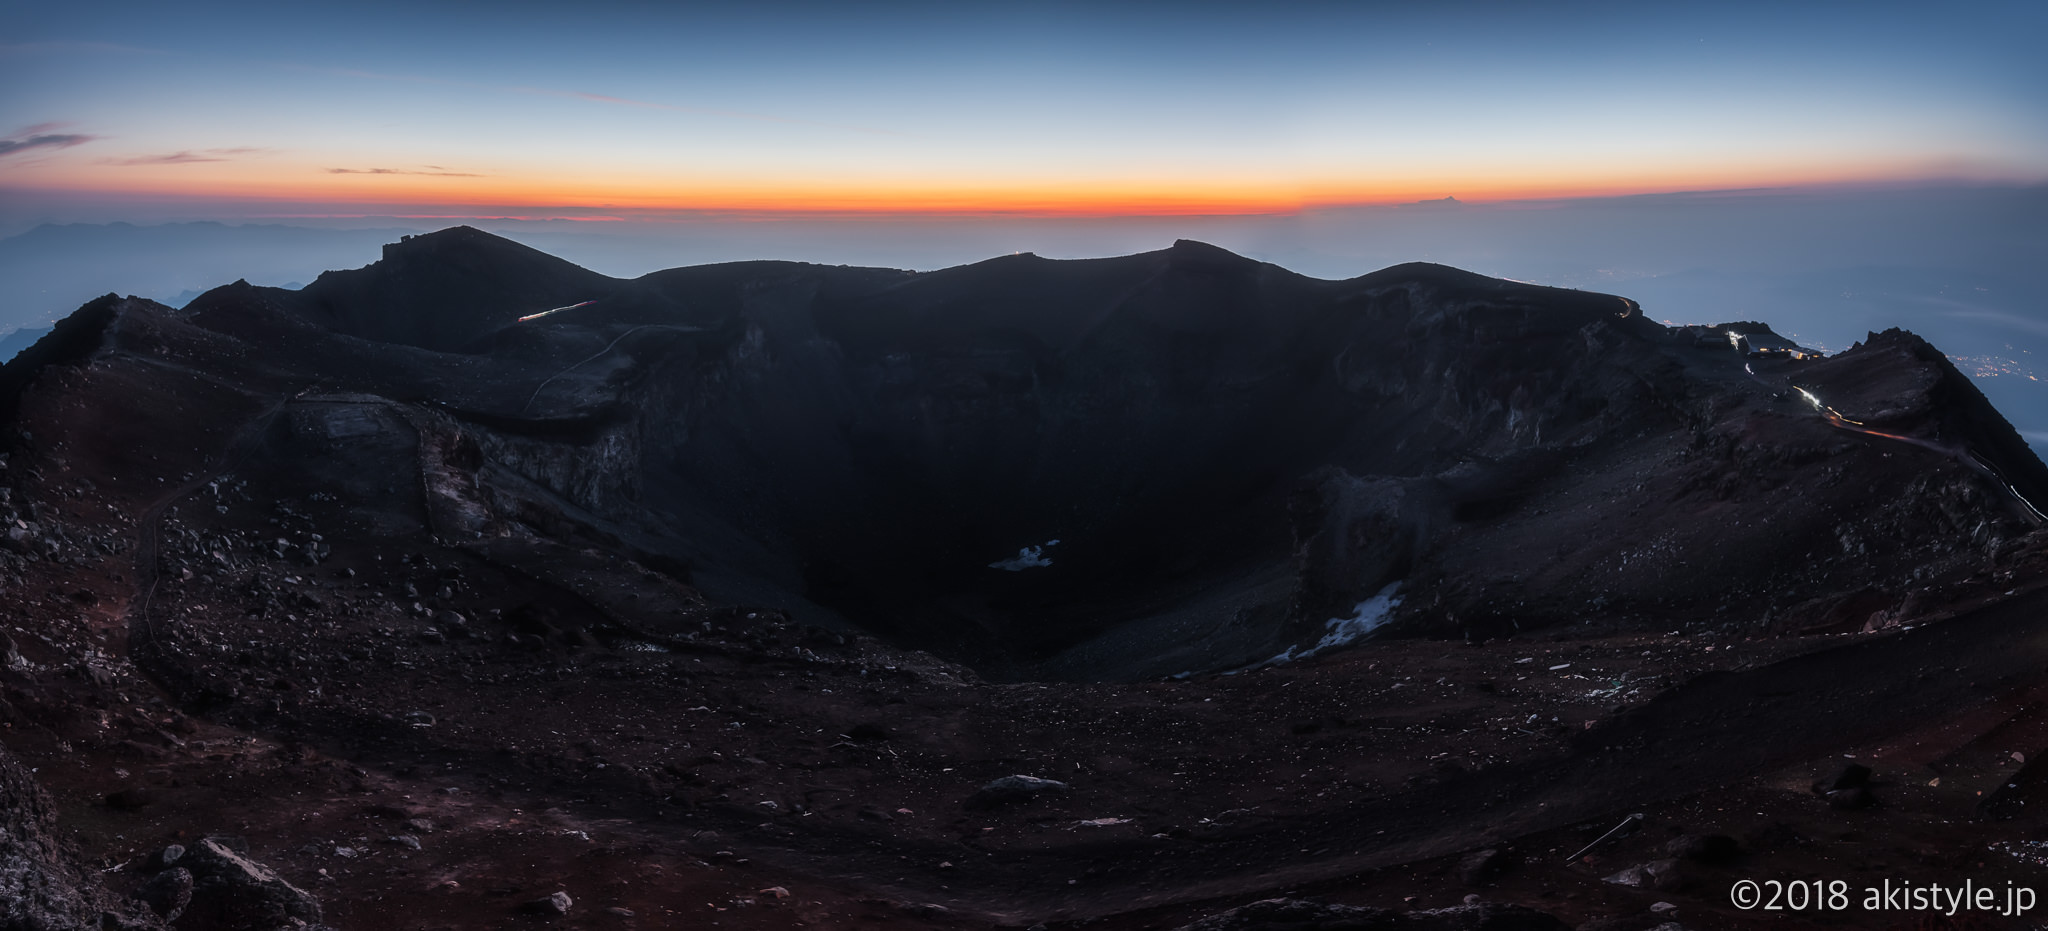 日の出前の富士山の火口